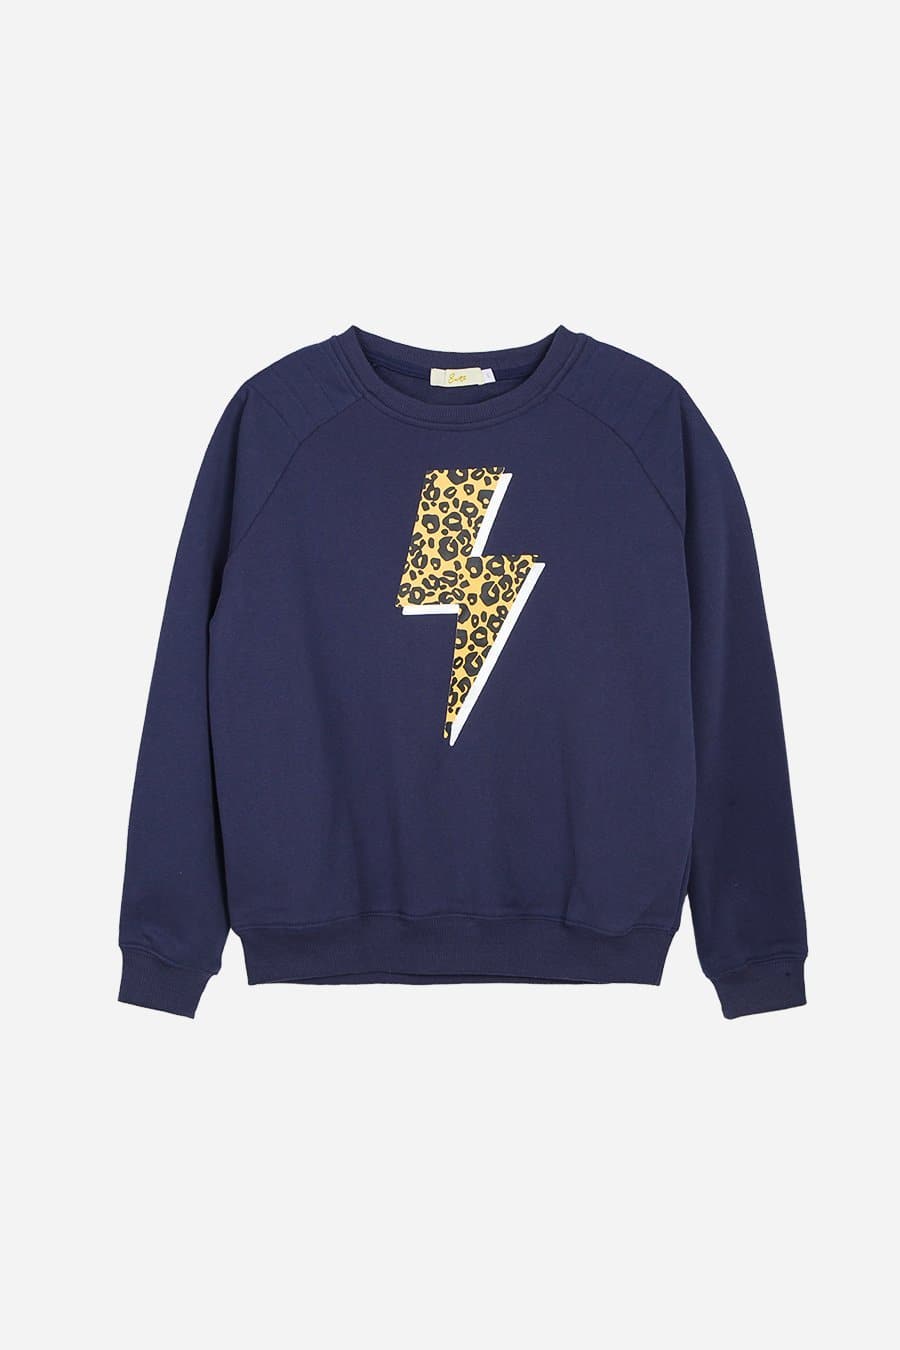 Leopard Lightening Bolt Sweatshirt - Aurina Ltd